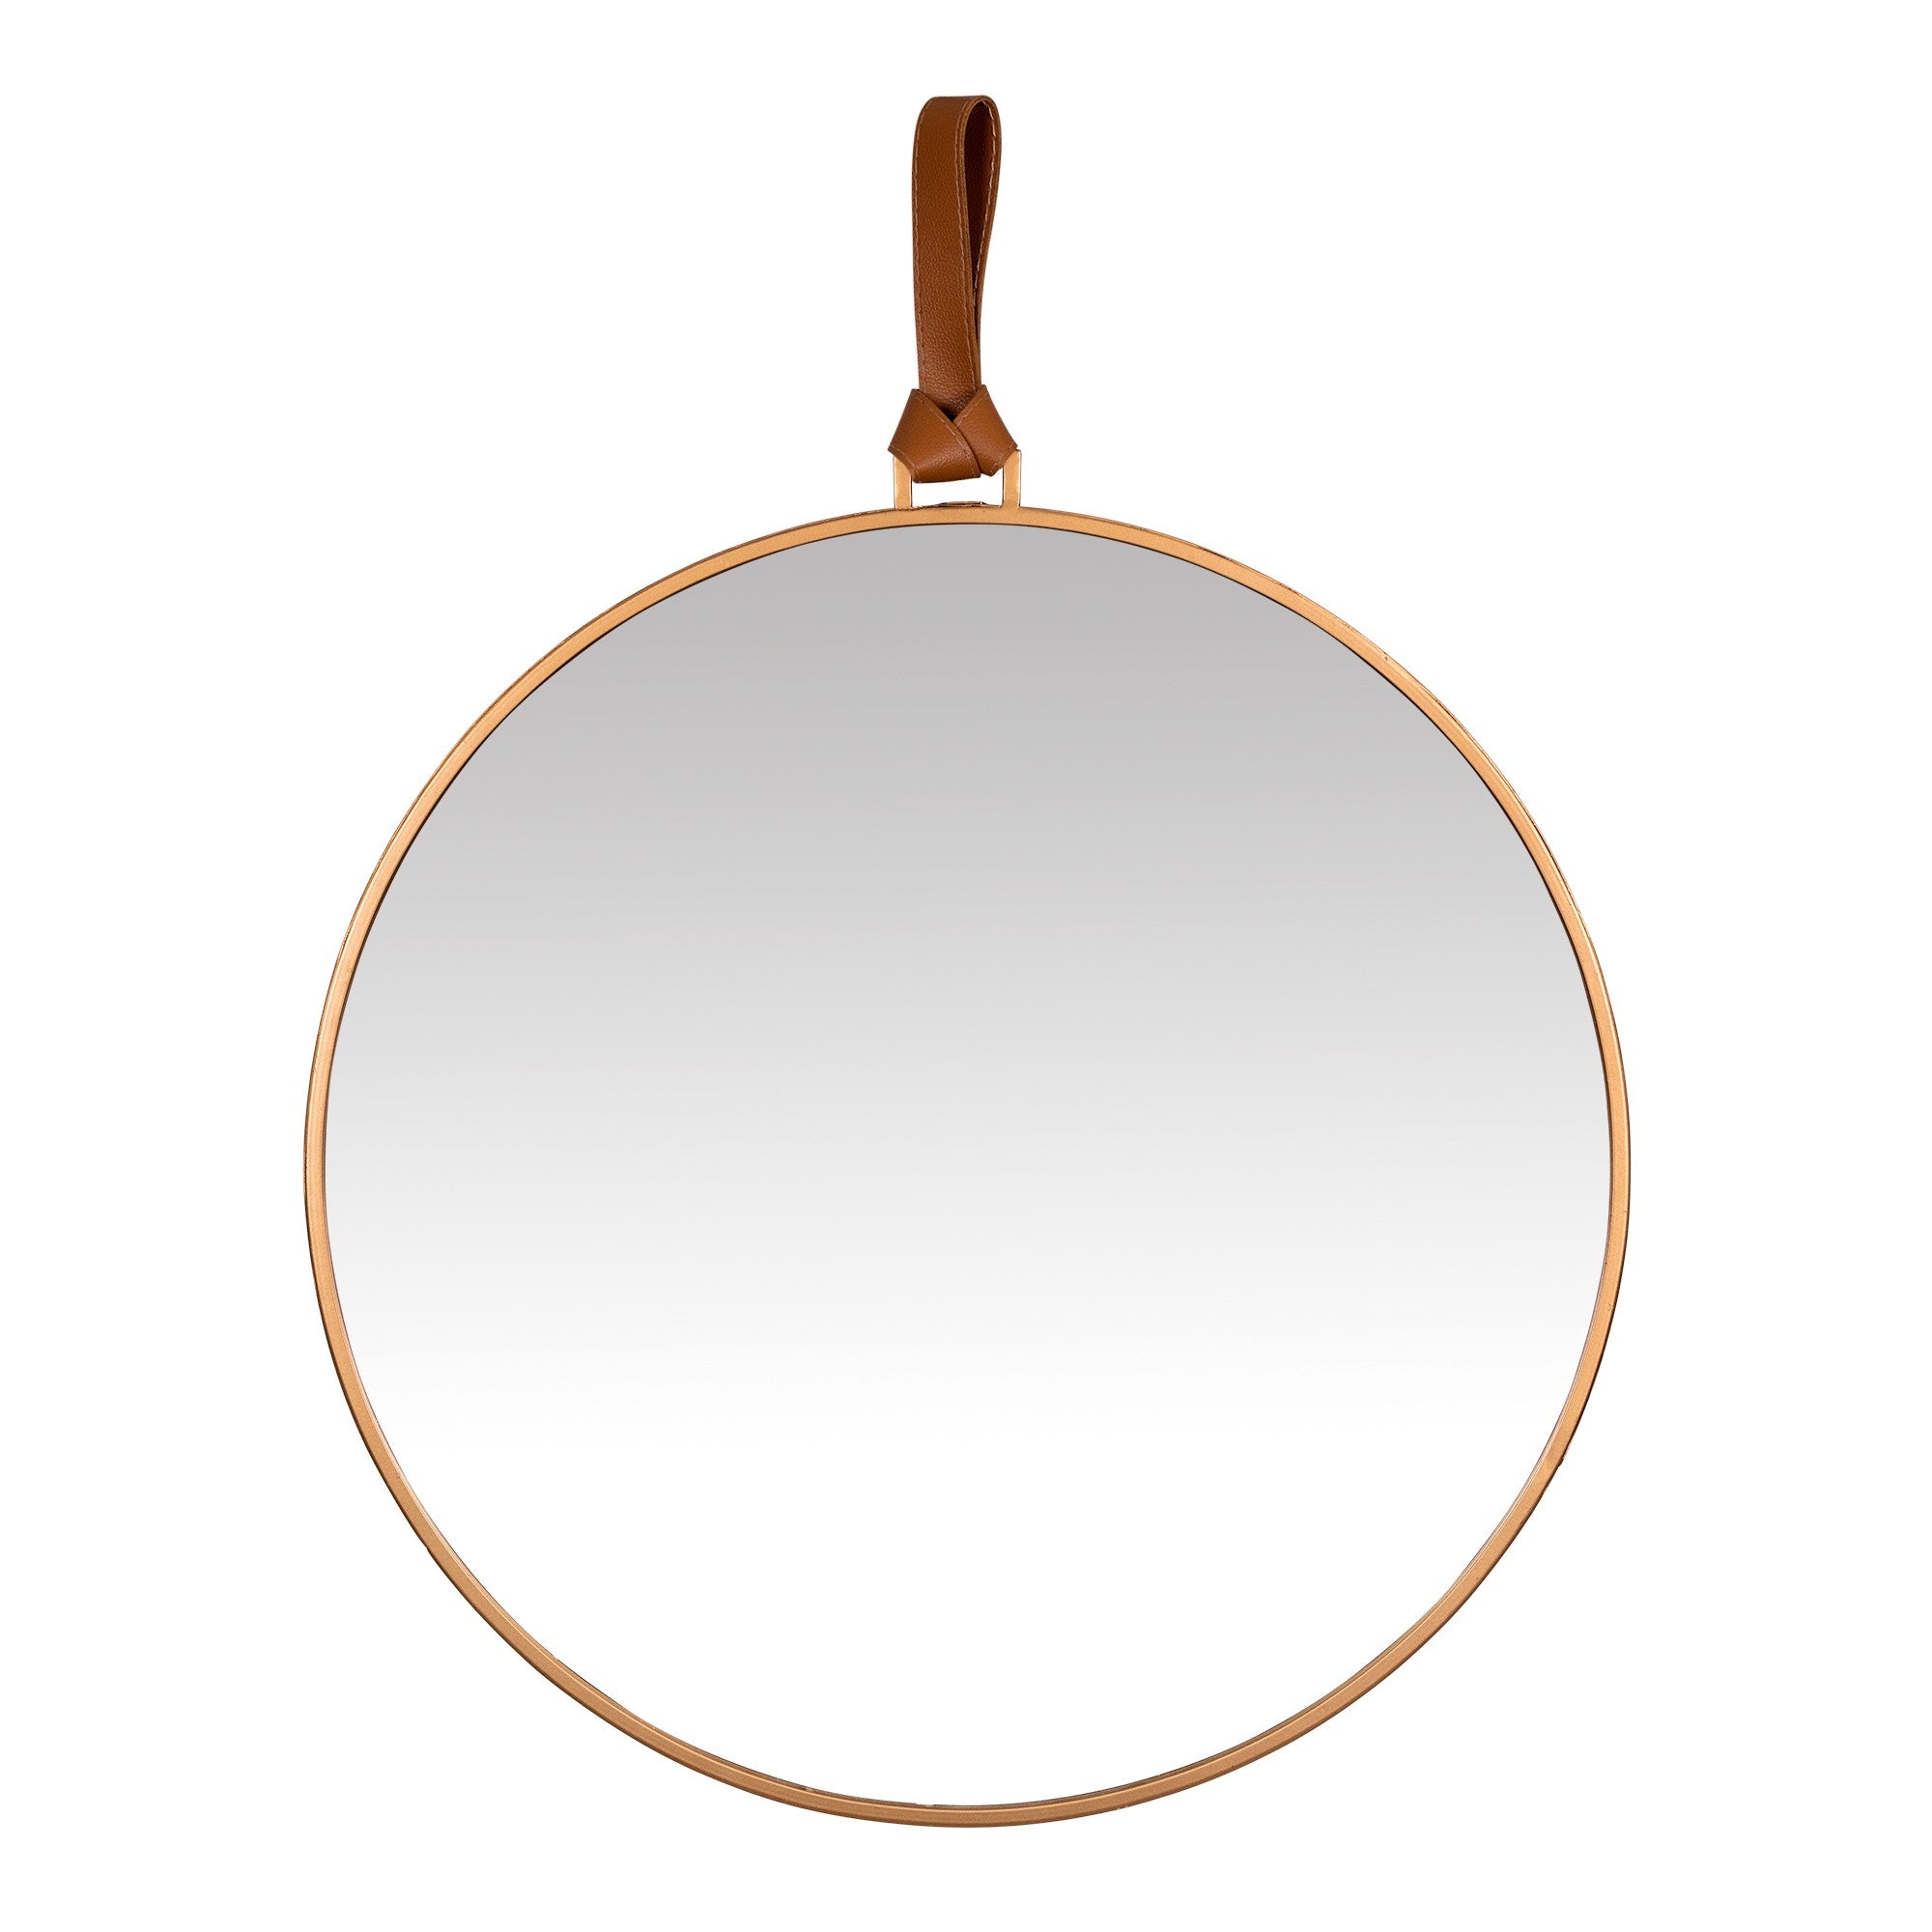 Minimalist Gold Round Mirror with Leather Strap